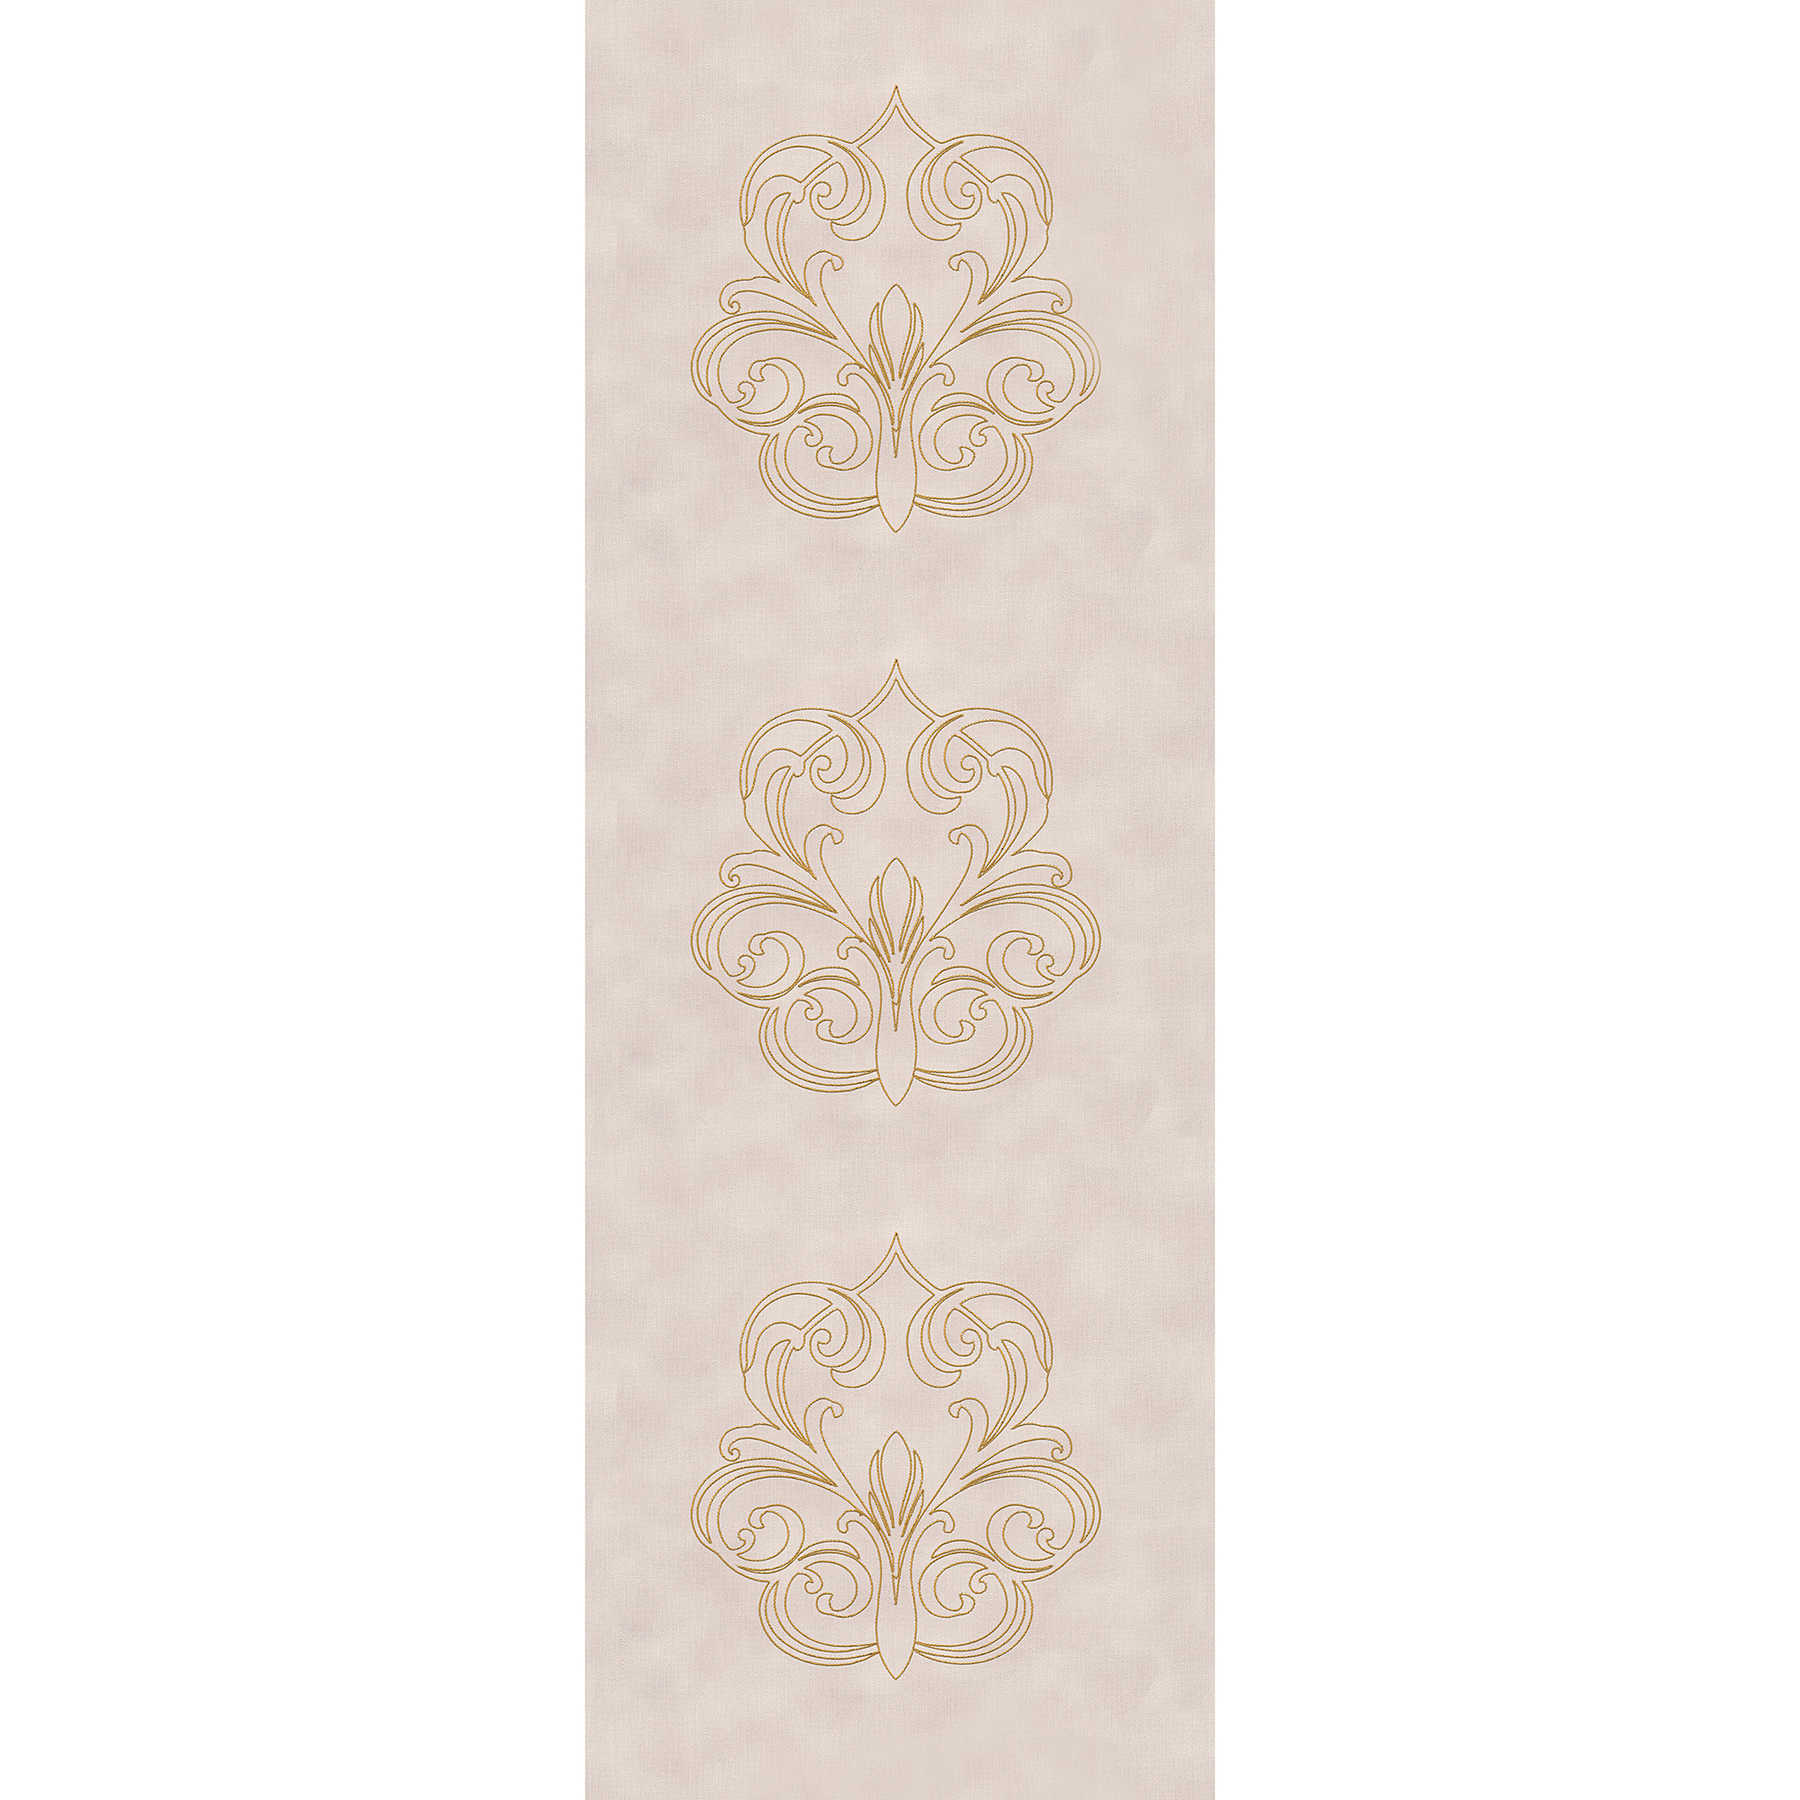         Premium-Panel mit Barock Ornamenten – Lila, Gold
    